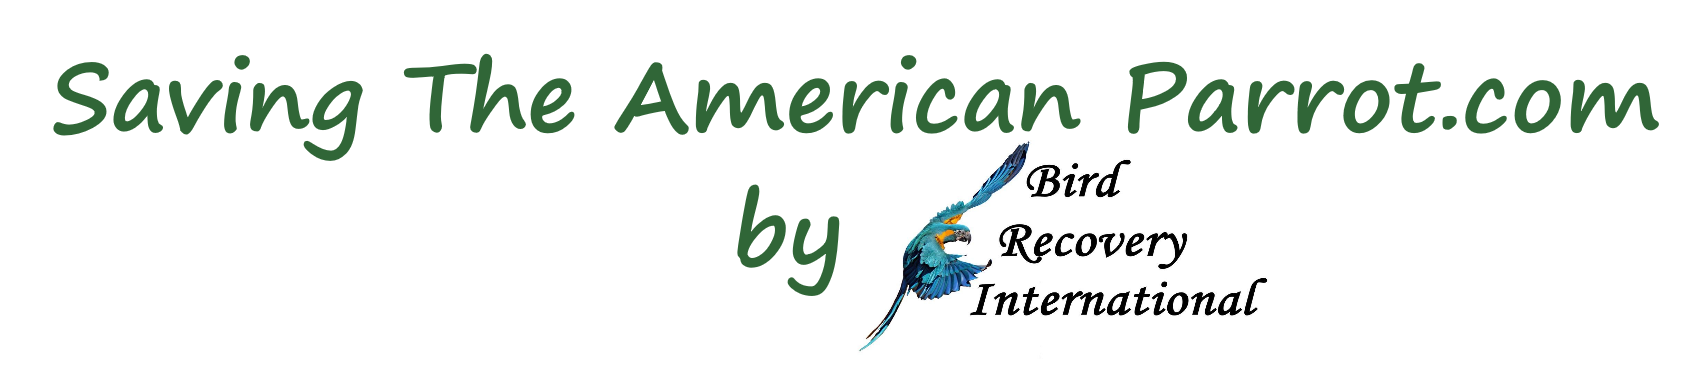 Saving The American Parrot.com